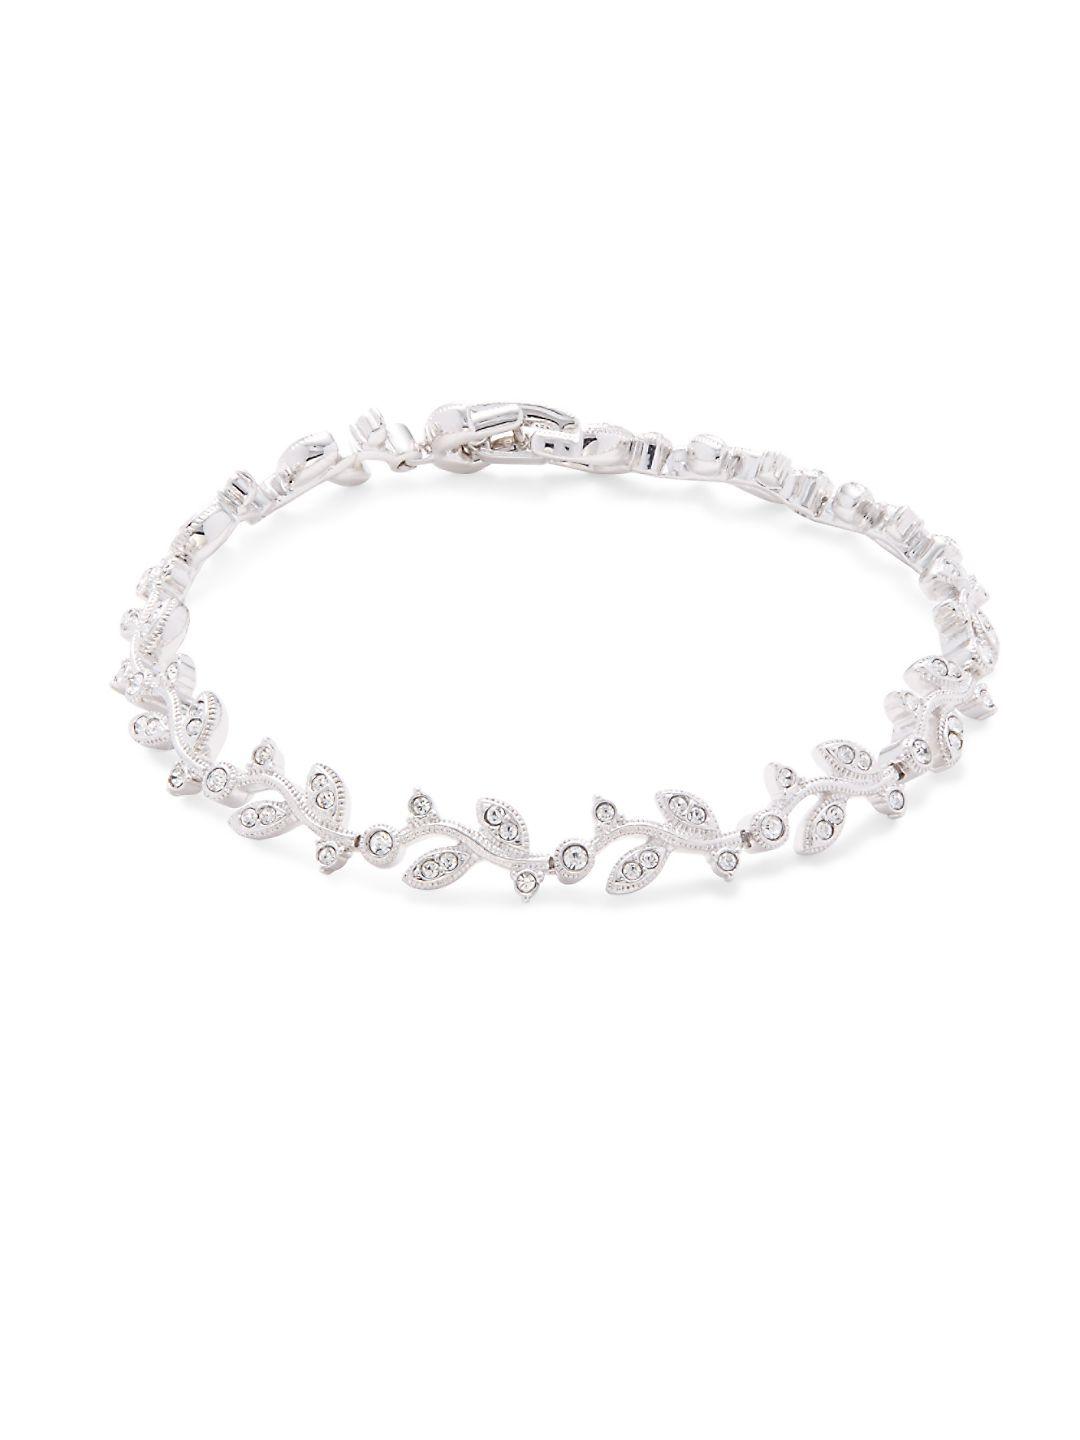 Adriana Orsini Crystal Nouveau Vine Bracelet in Silver (Metallic) - Lyst